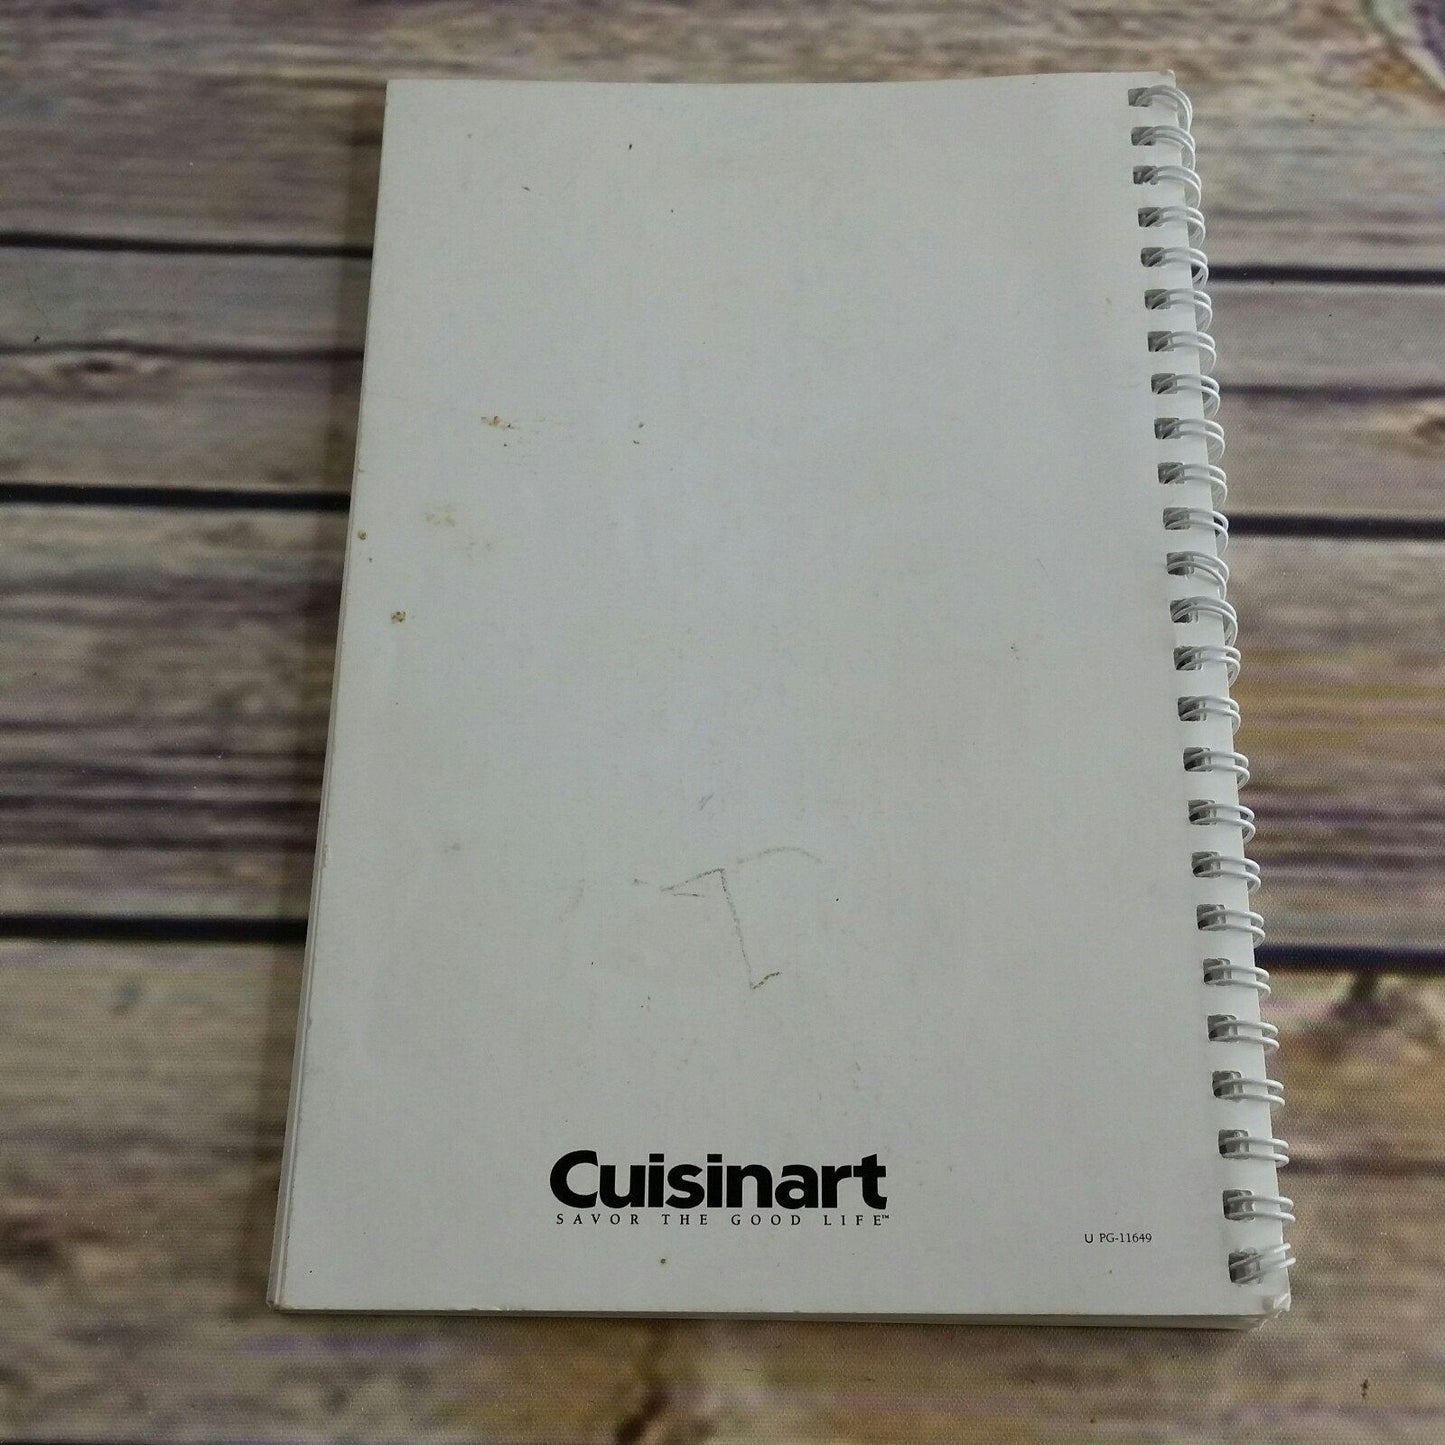 Vintage Cuisinart Cookbook Food Processor Recipes 1990s Early 2000s Spiral Bound Paperback Booklet